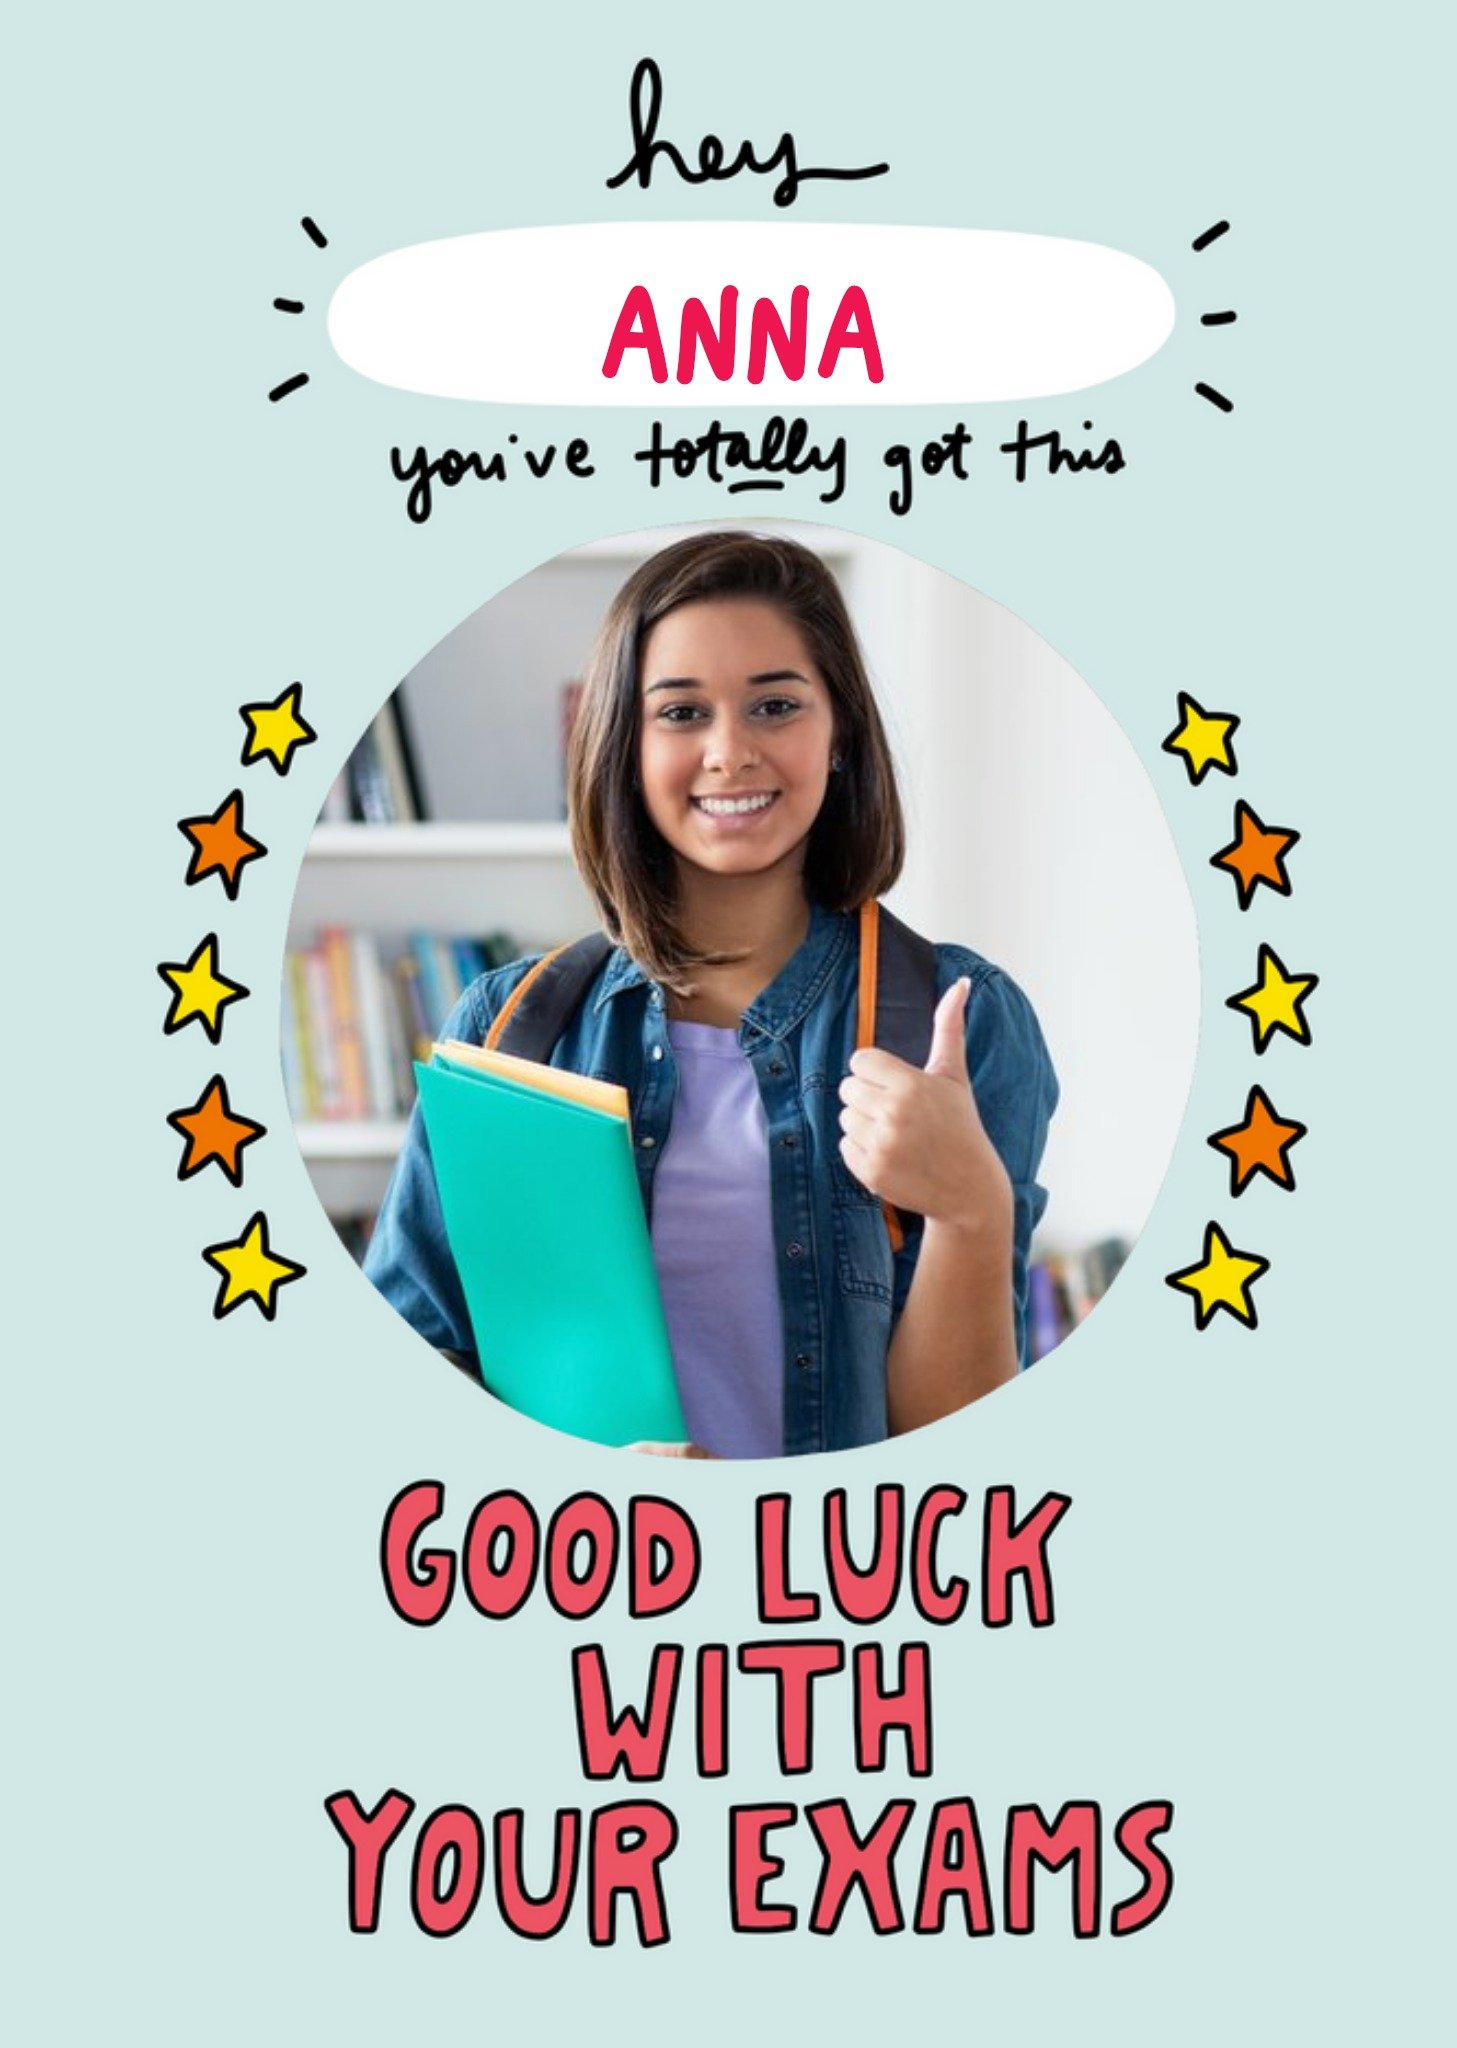 Moonpig Angela Chick Personalised Photo Upload Exams Good Luck Card, Large